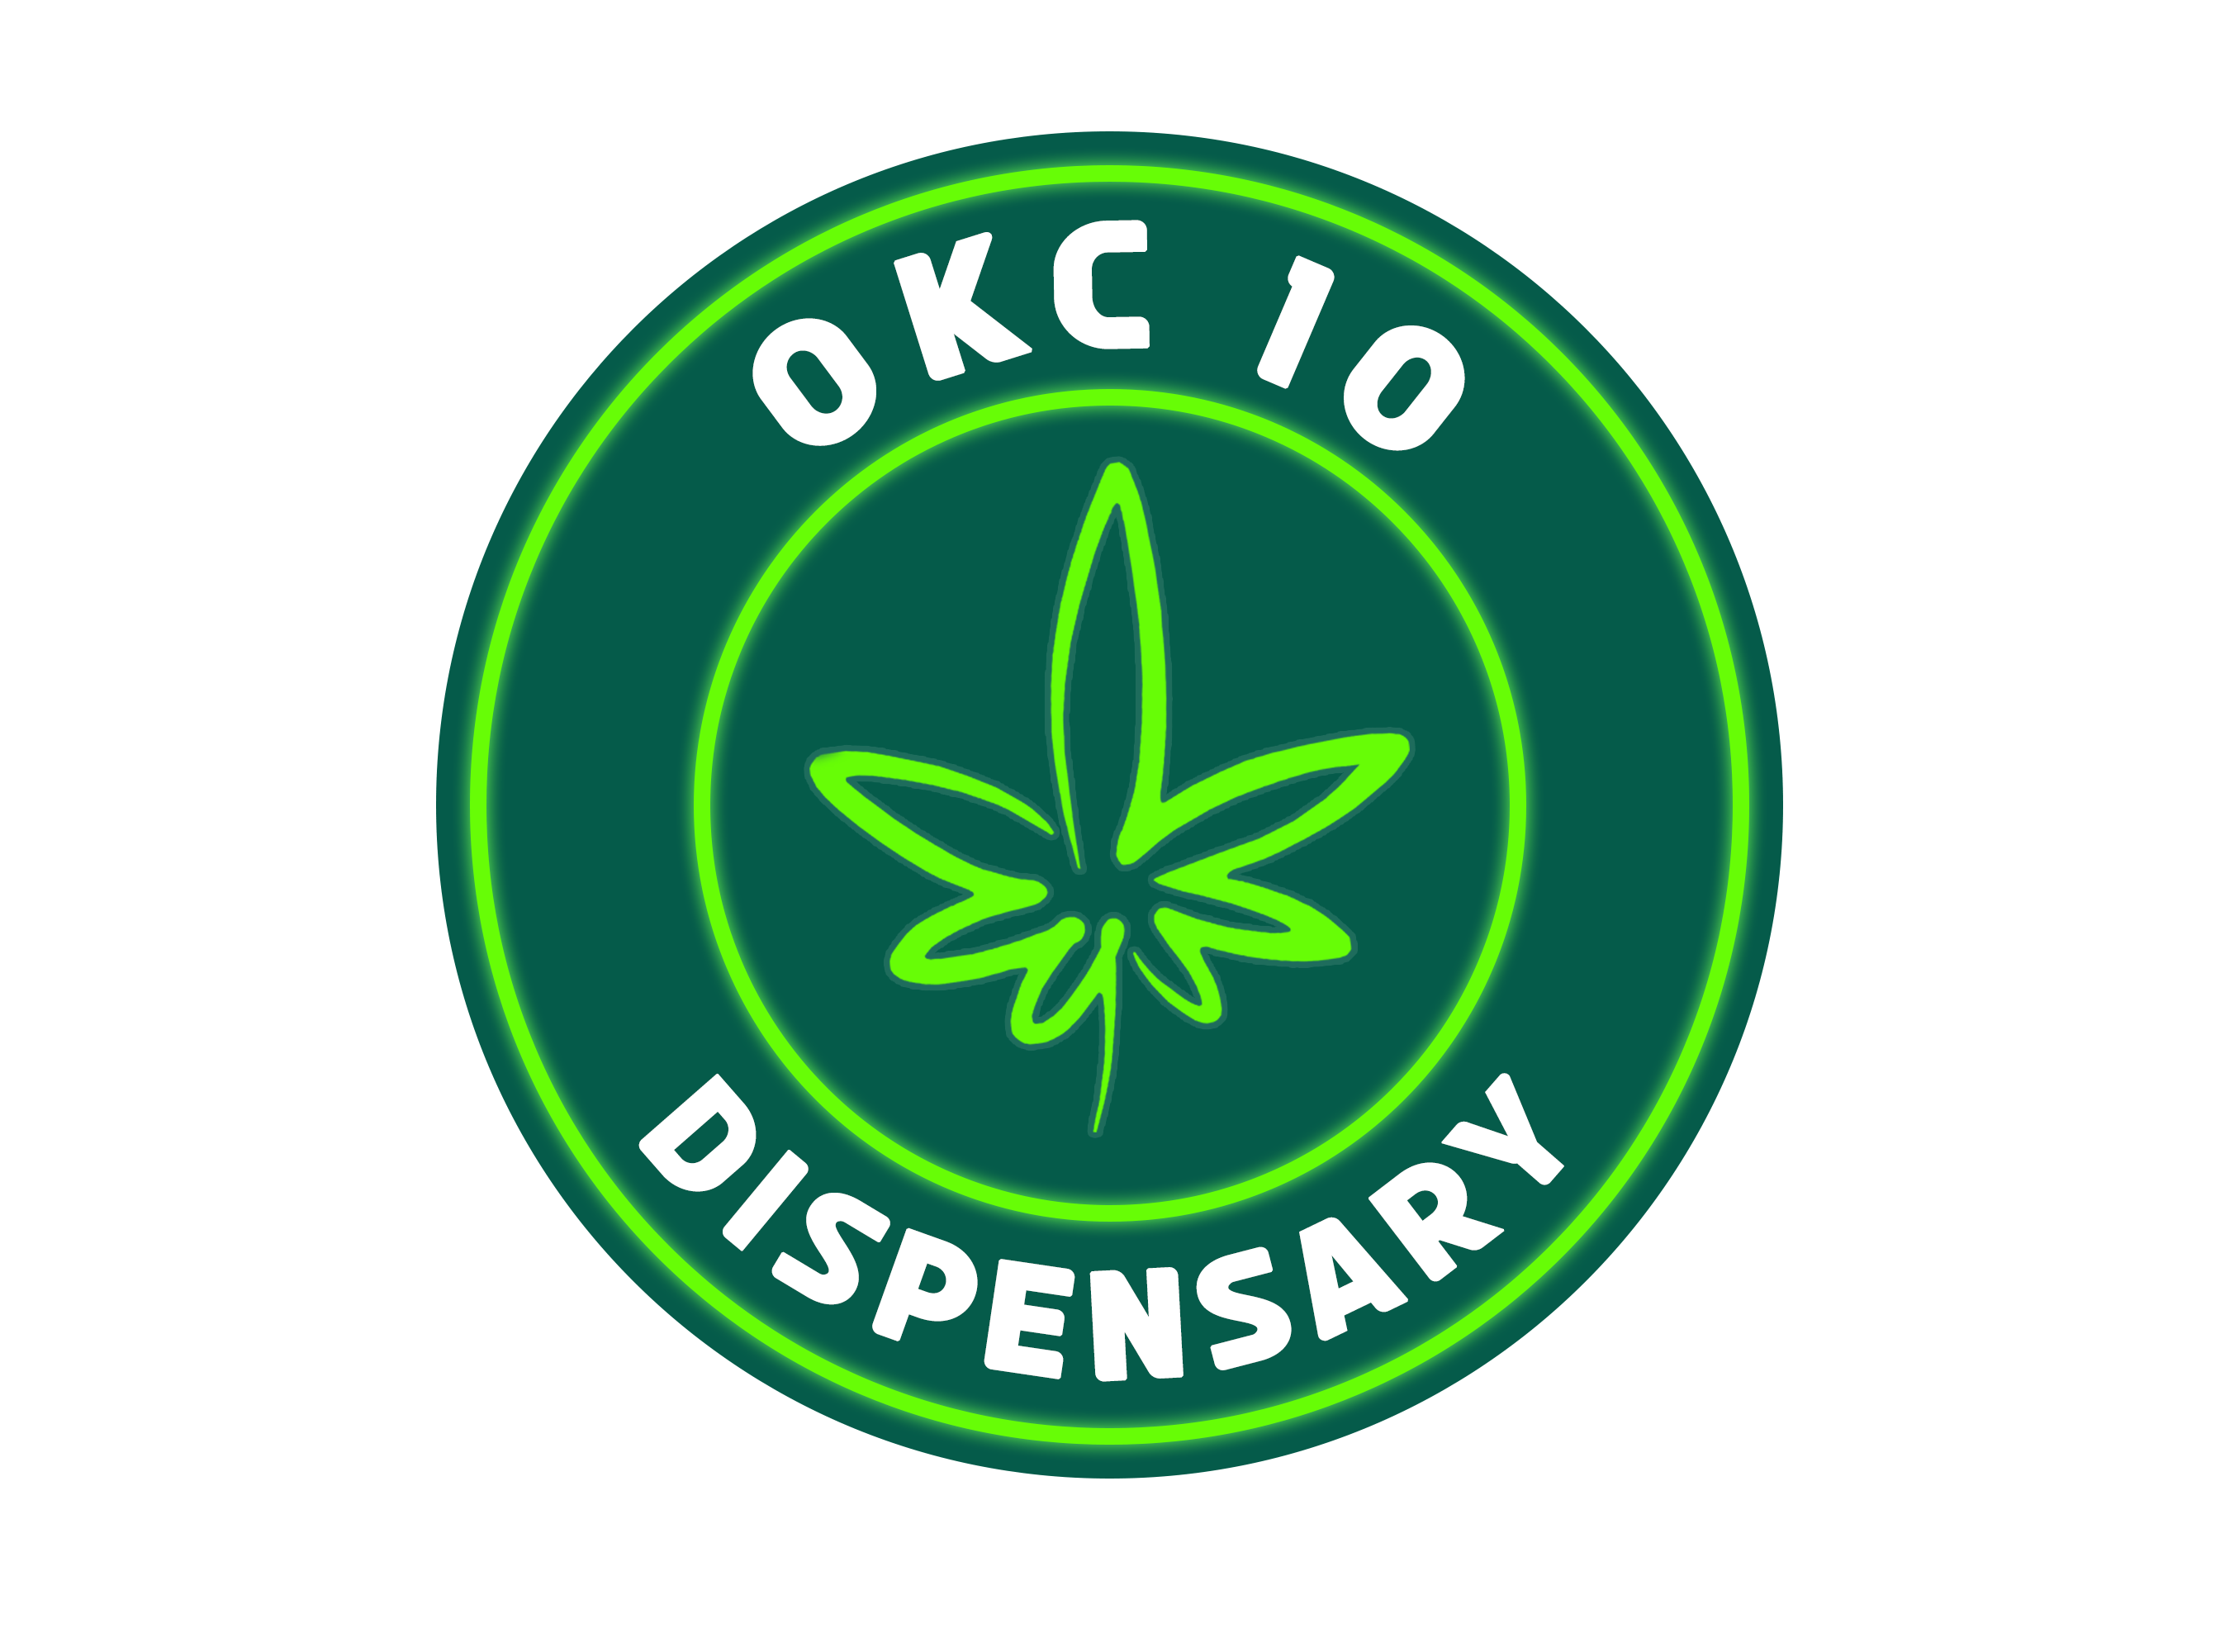 OKC 10 DISPENSARY